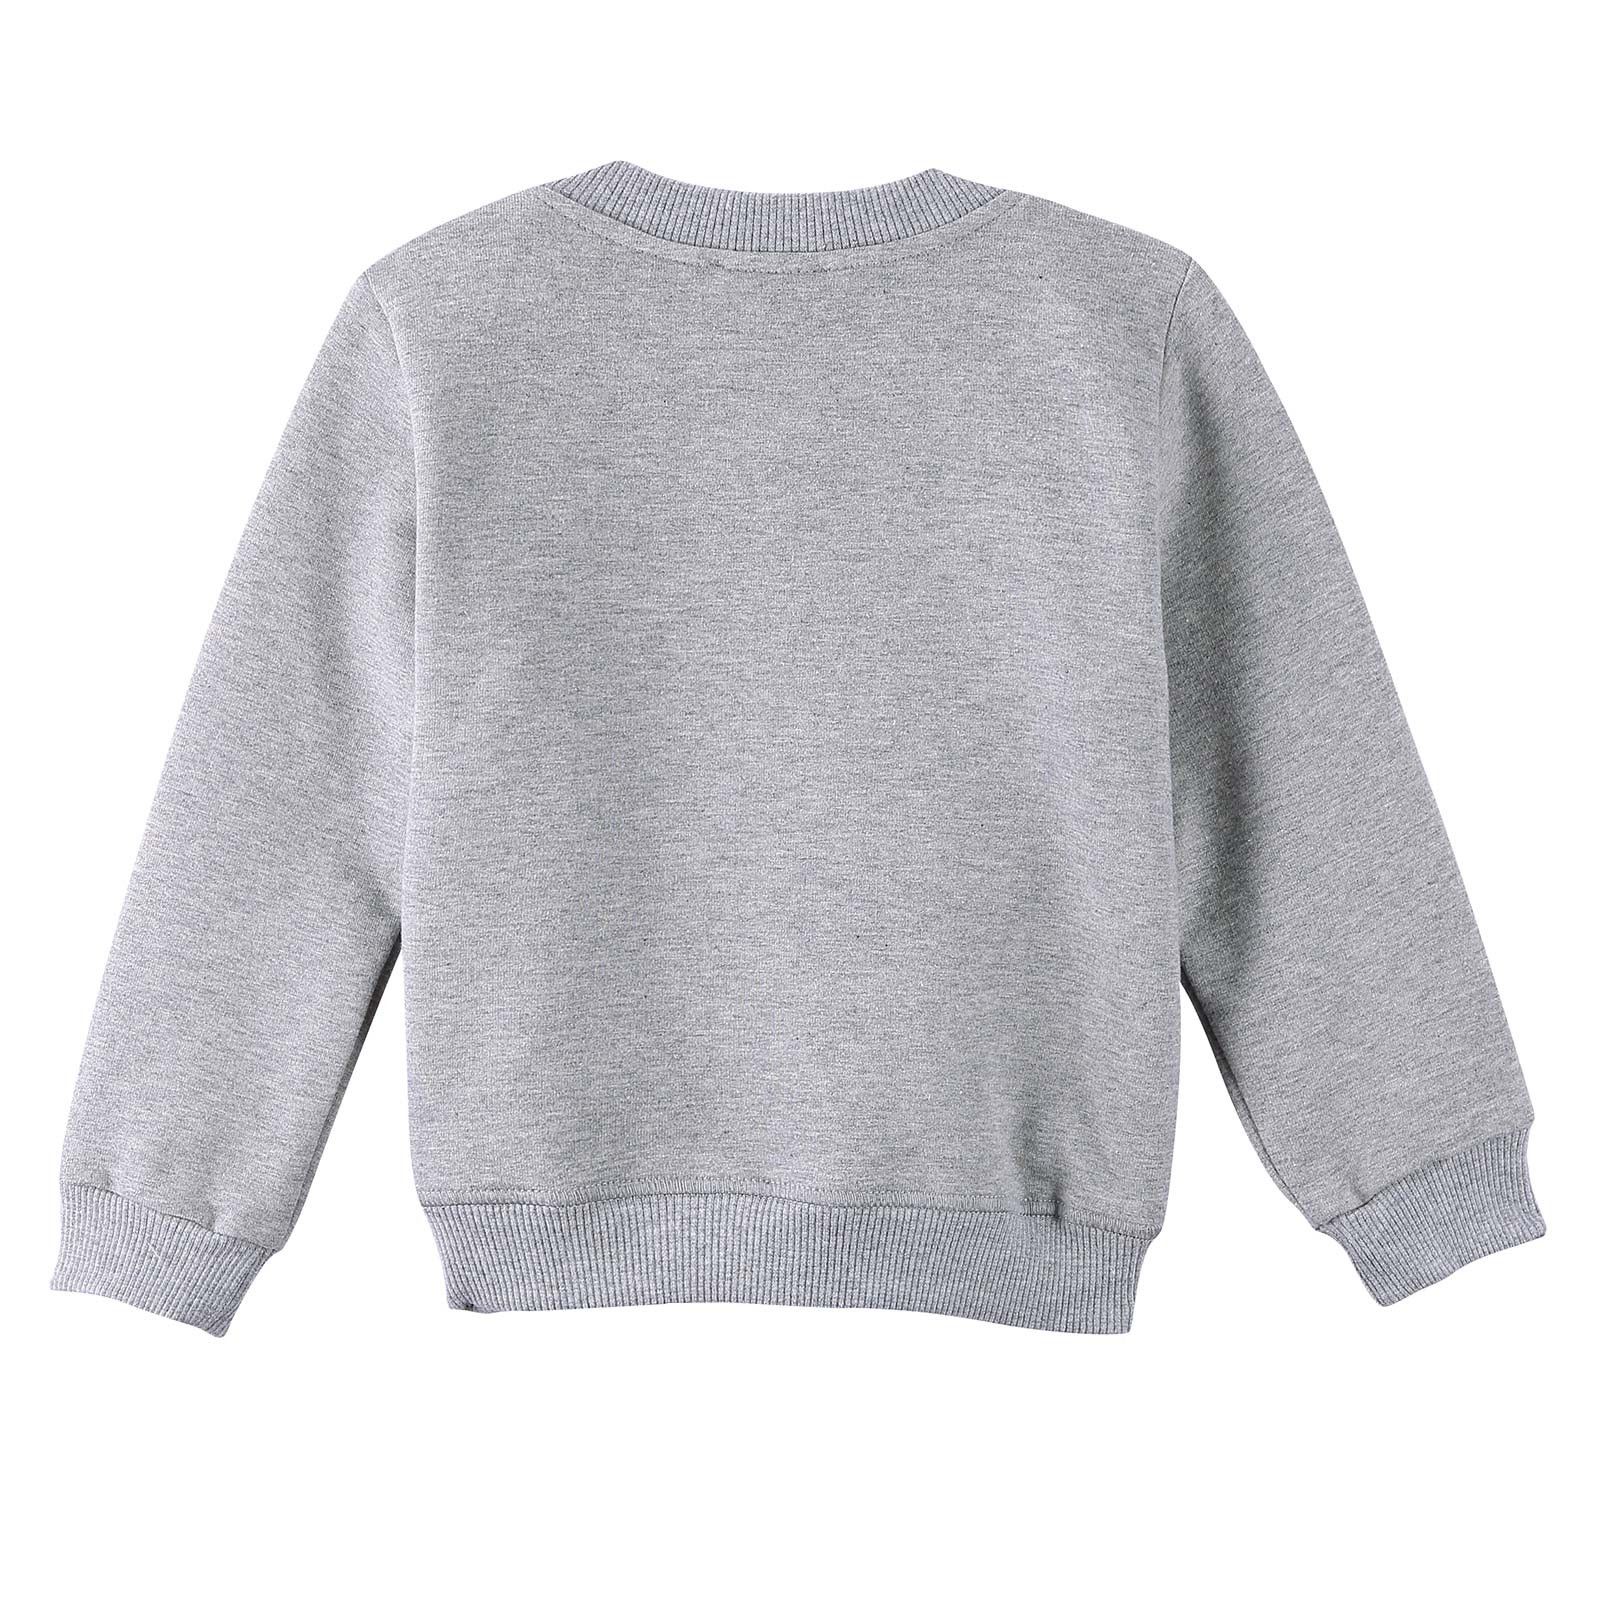 Girls Grey Cotton Sweatshirt With Embroidered Tiger Head Trims - CÉMAROSE | Children's Fashion Store - 2